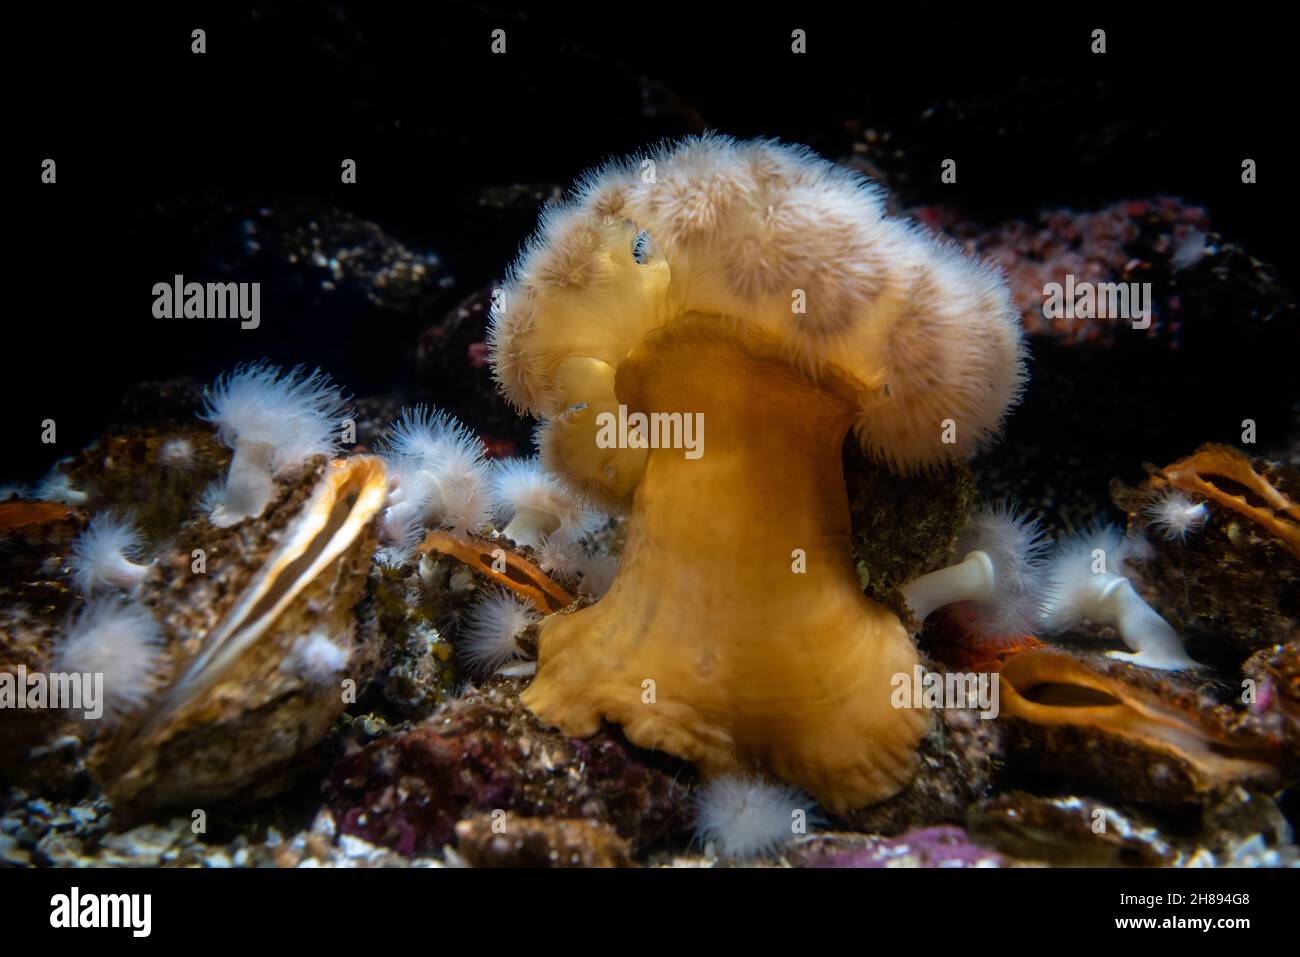 Clonal plumose anemone or Metridium senile Stock Photo